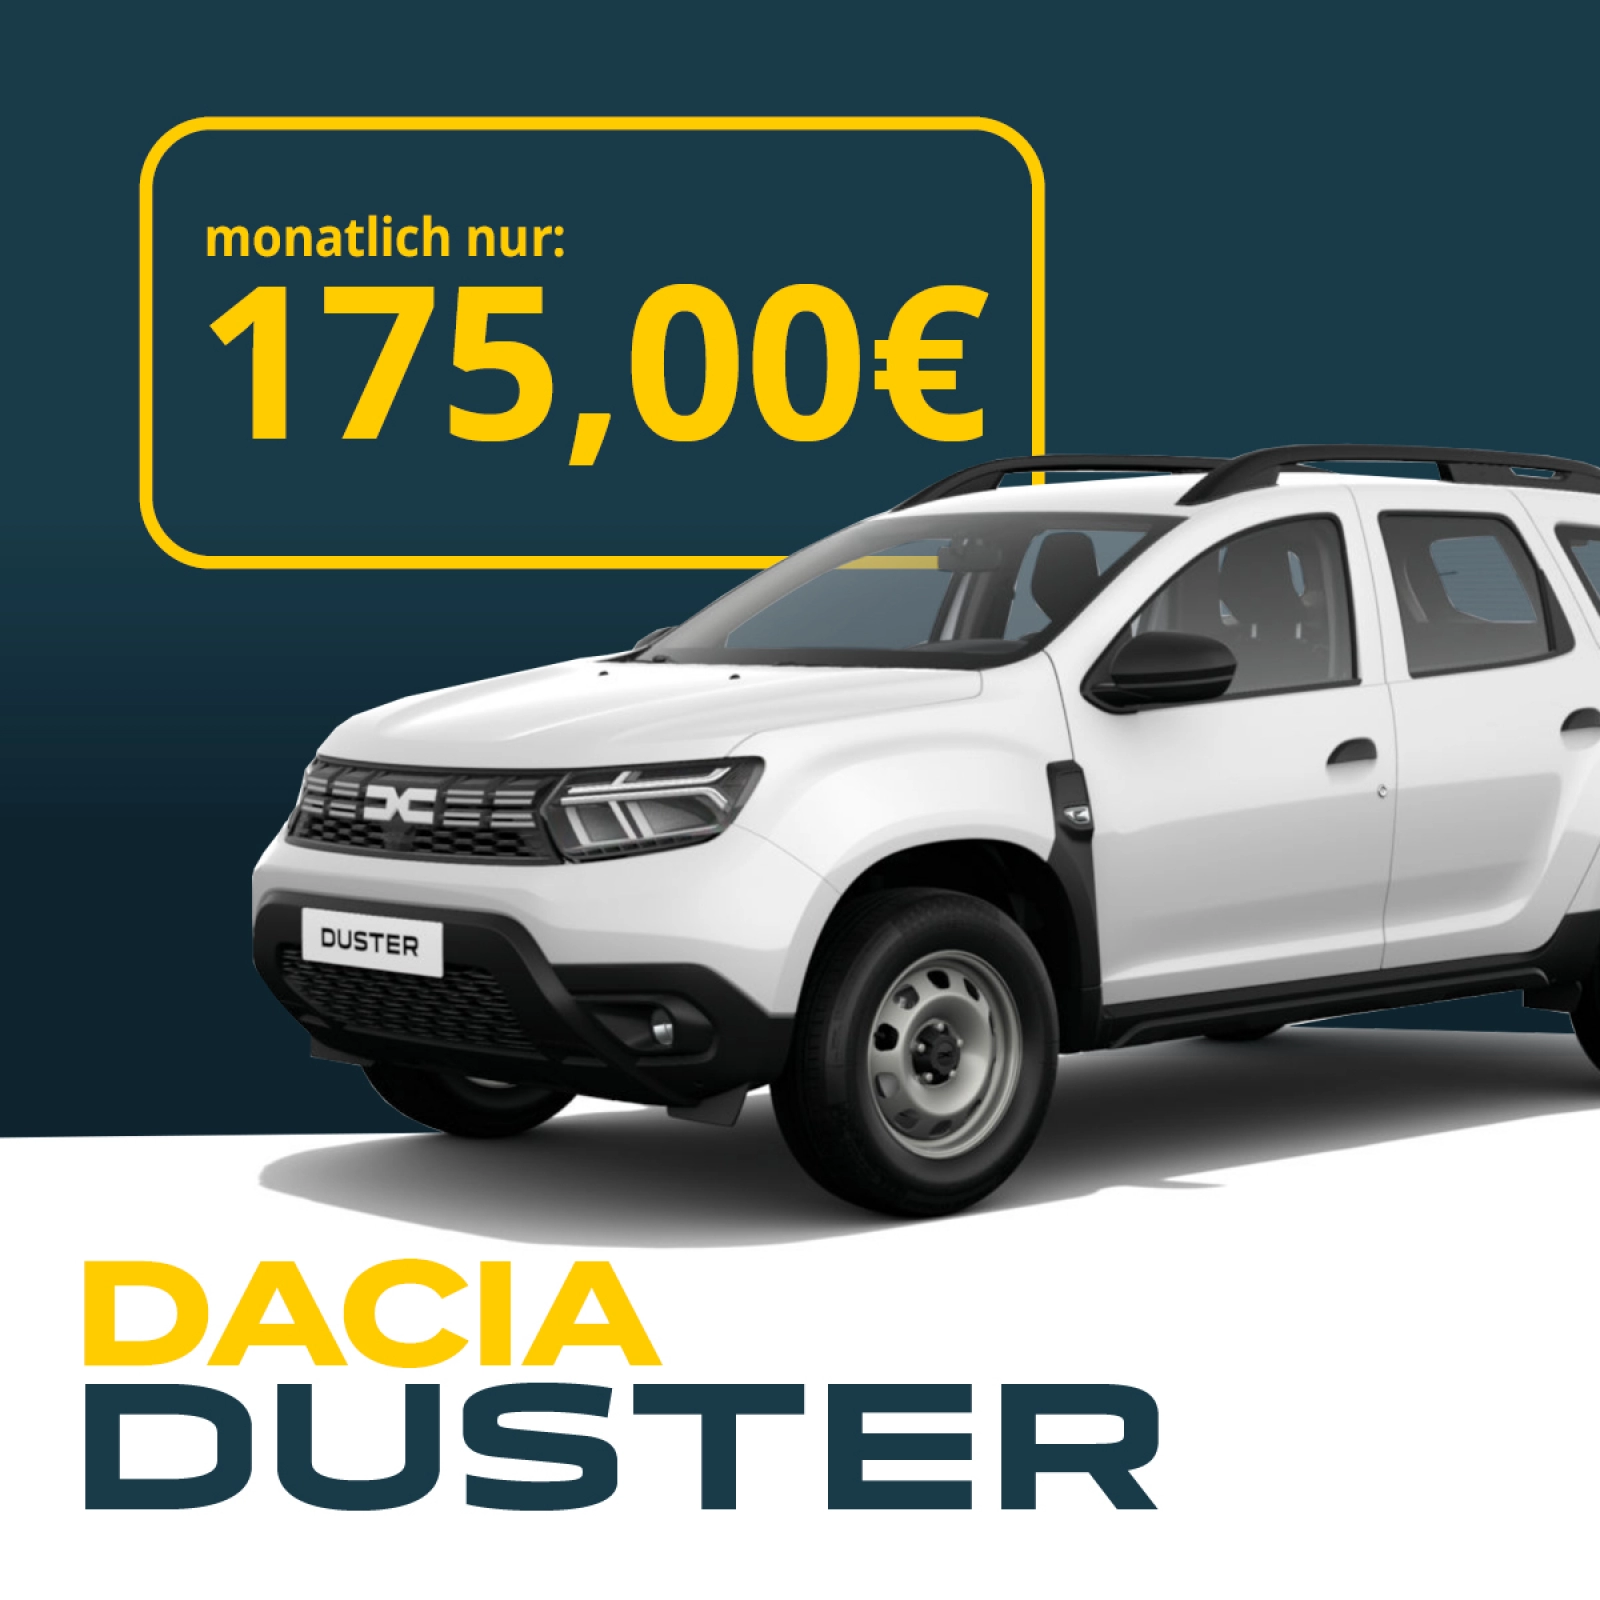 Dacia Duster 2: Das Gute bewahrt